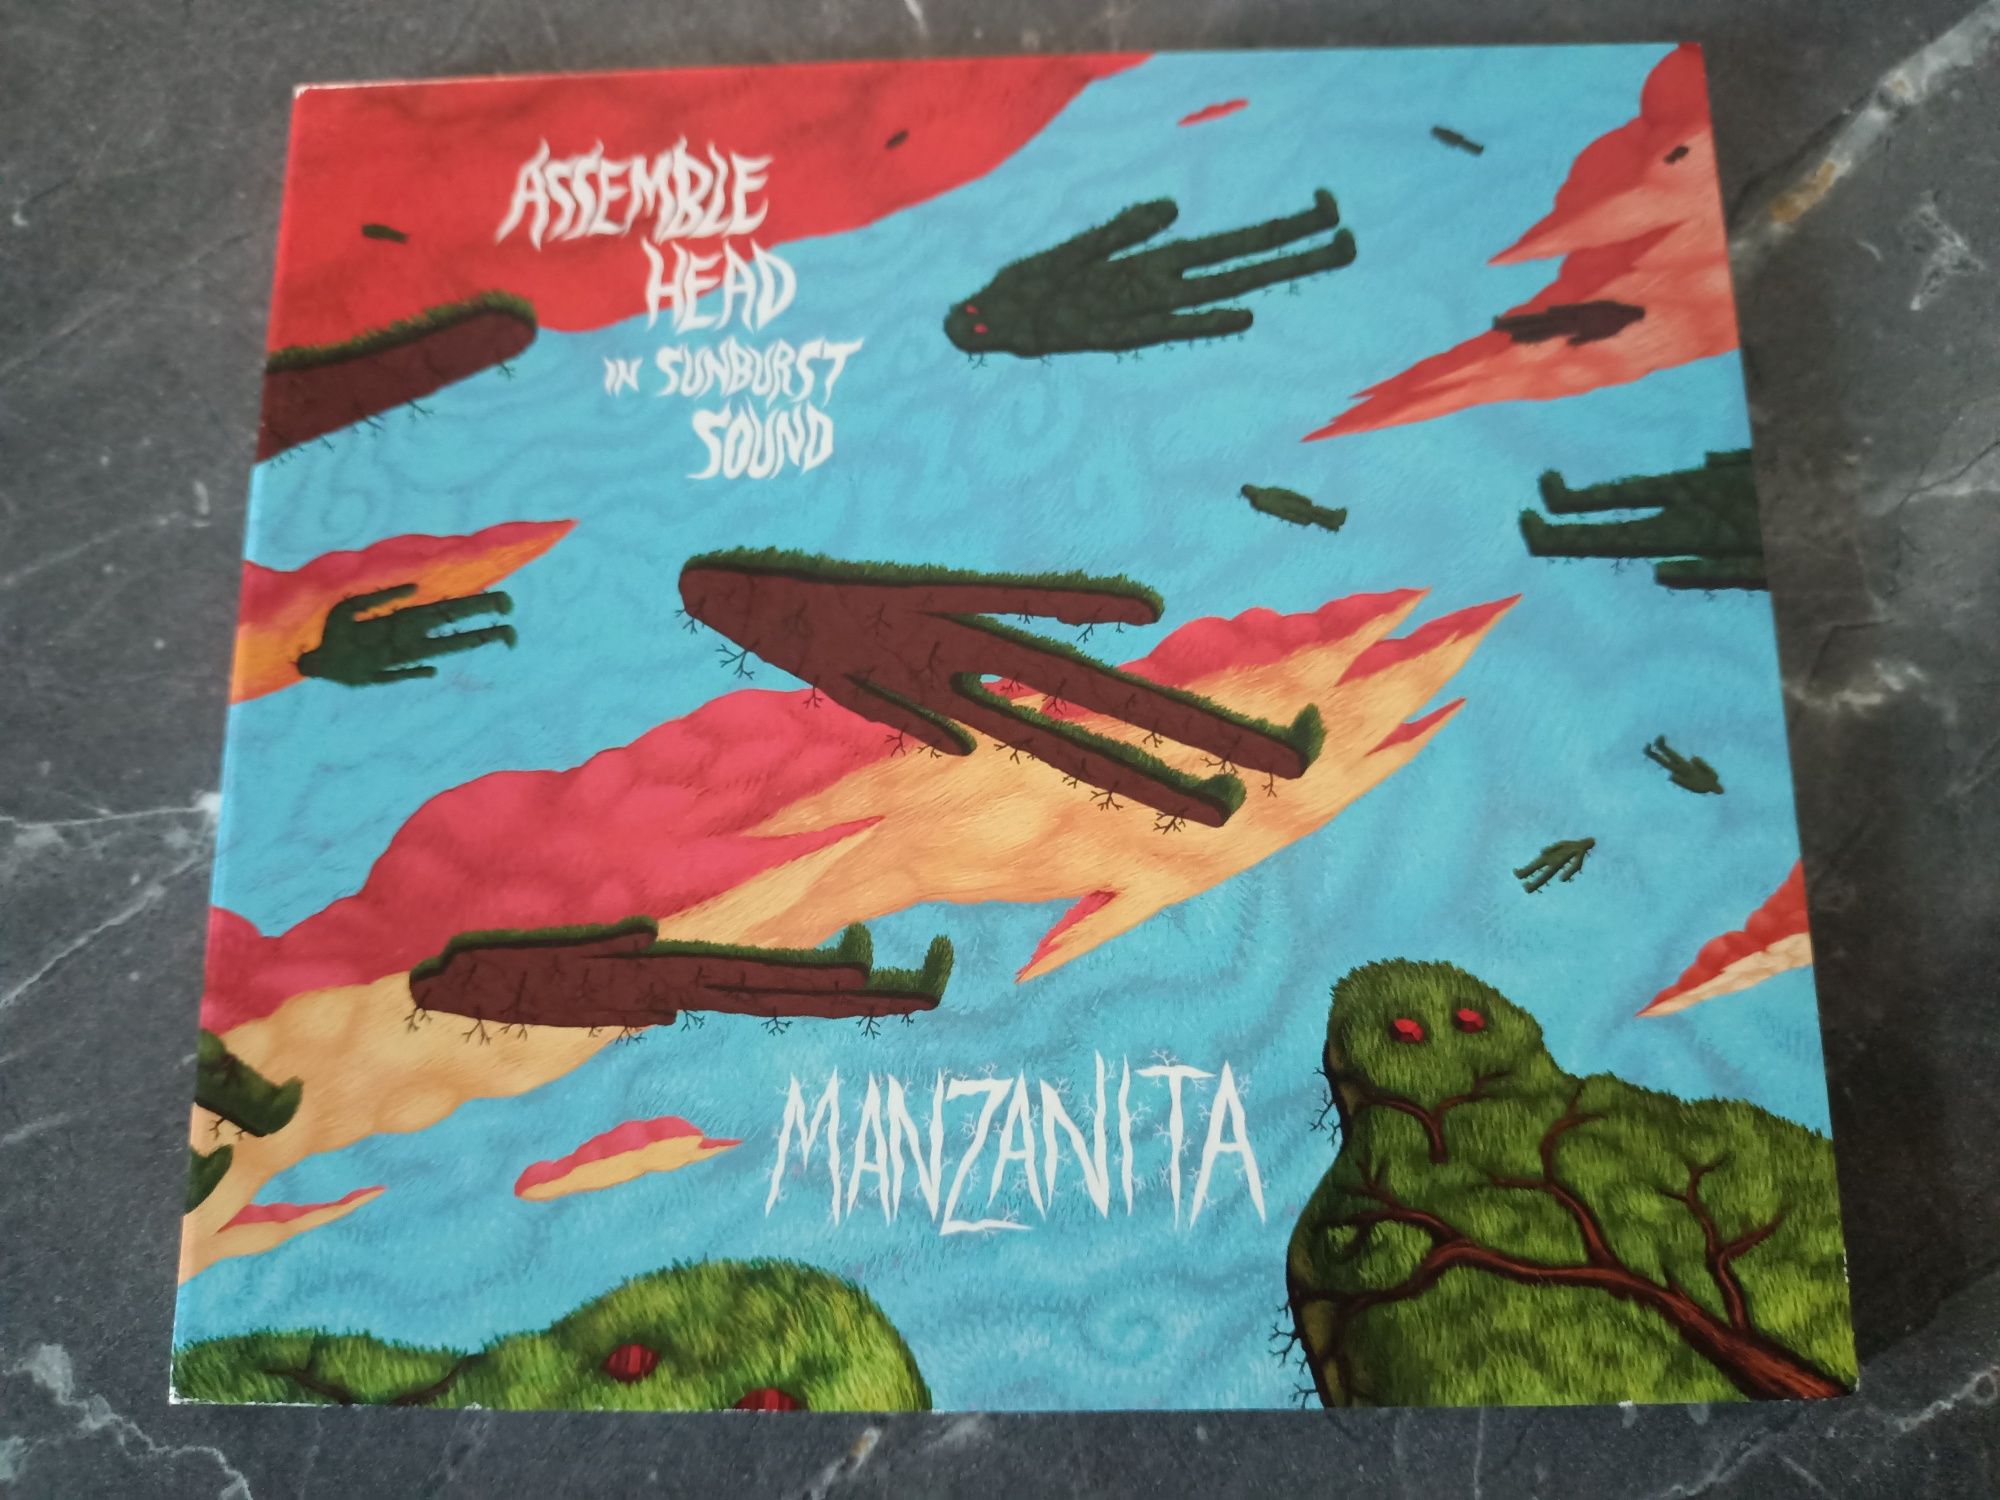 The Assemble Head In Sunburst Sound - Manzanita (CD, Album, Dig)(vg+)